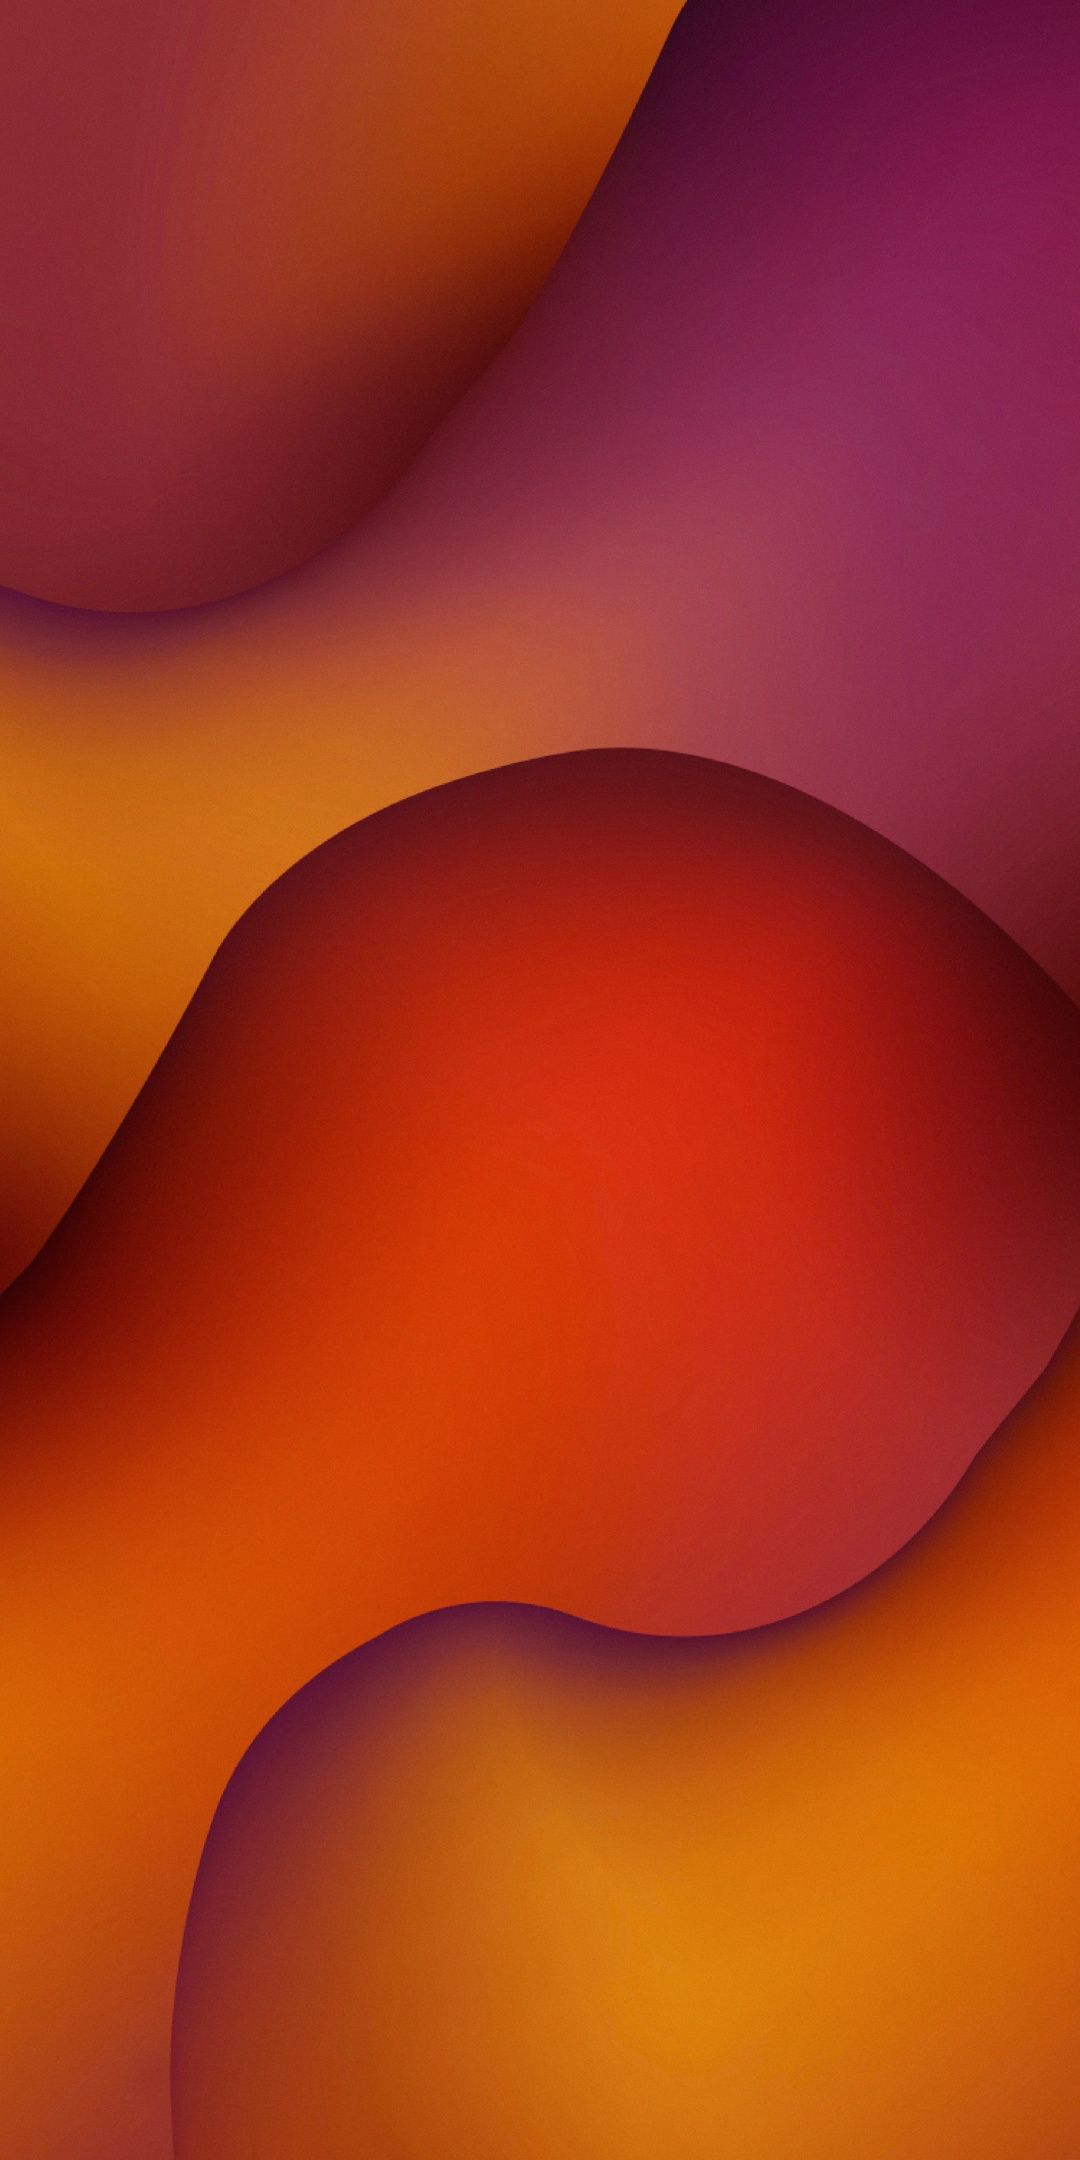 Abstraction, waves, gradient, orange wallpaper